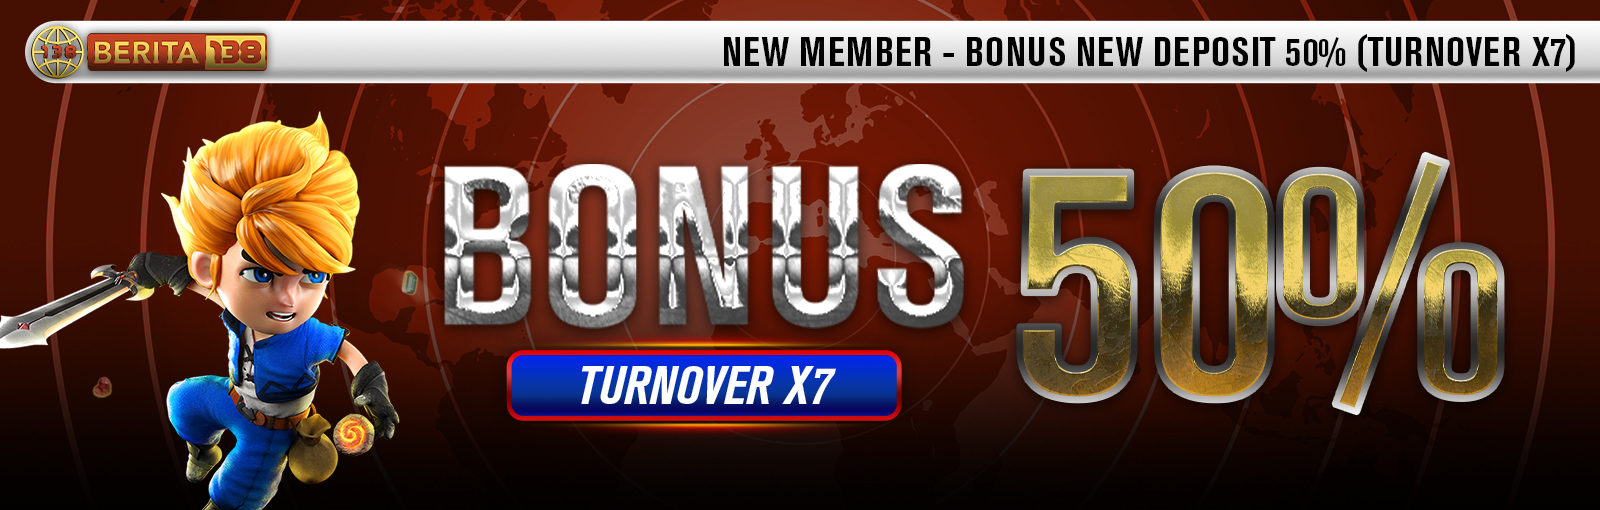 bonus50% new member